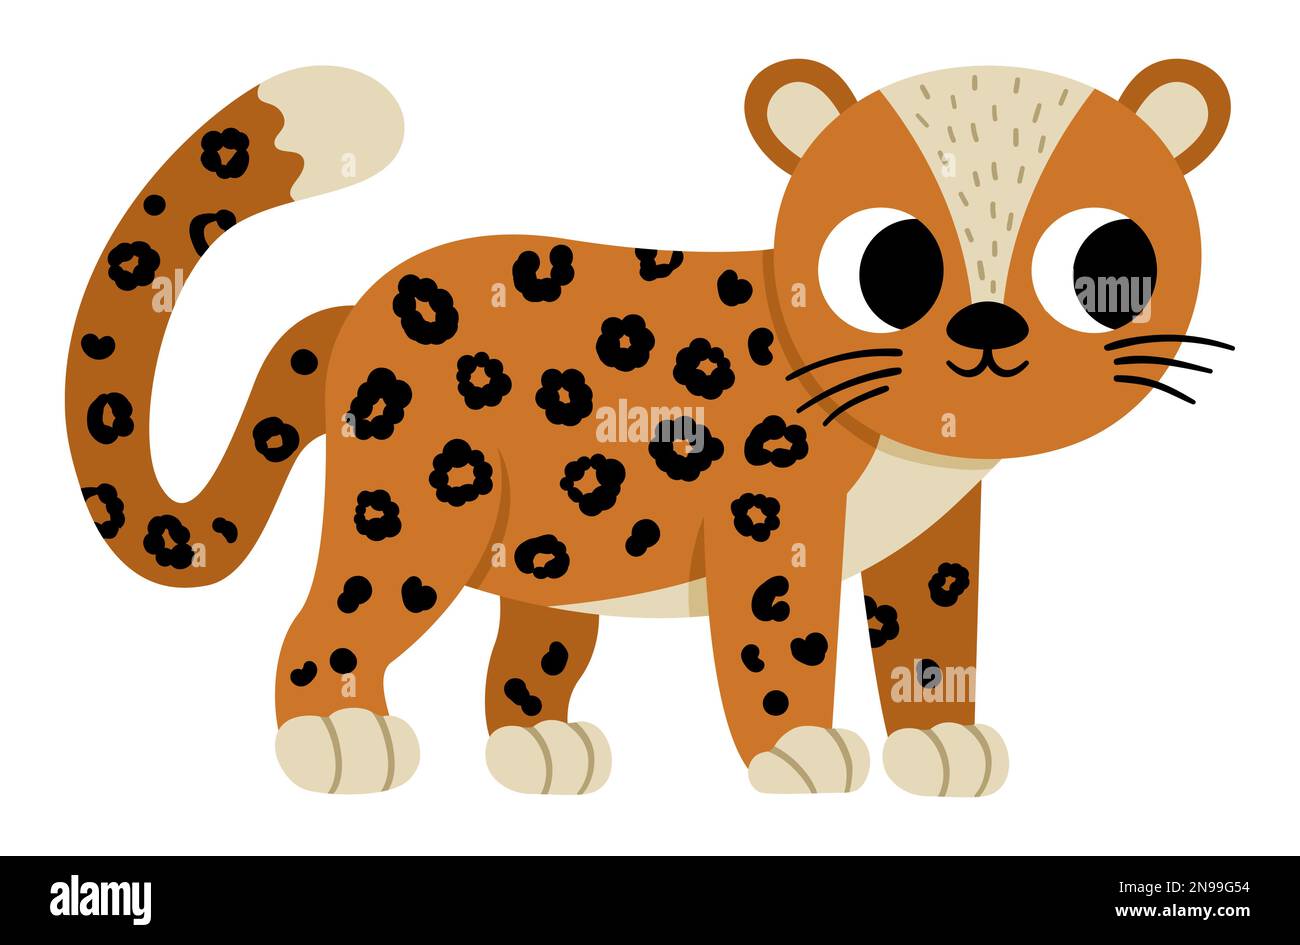 Amur leopard endangered Stock Vector Images - Alamy